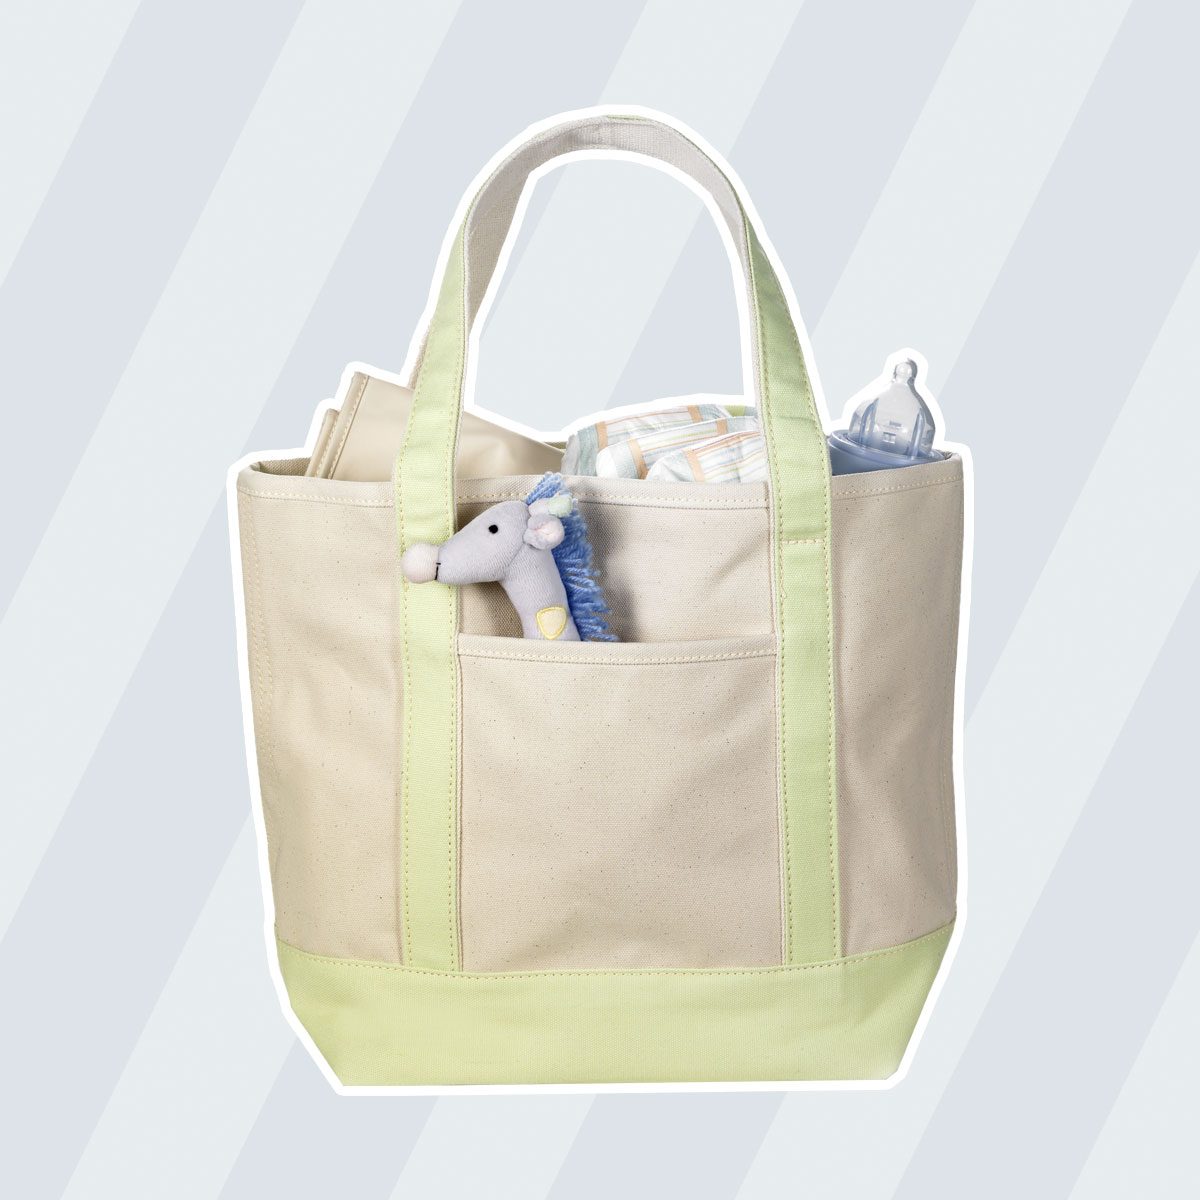 5 Creative Ideas for a Reusable Shopping Bag from Sapphire